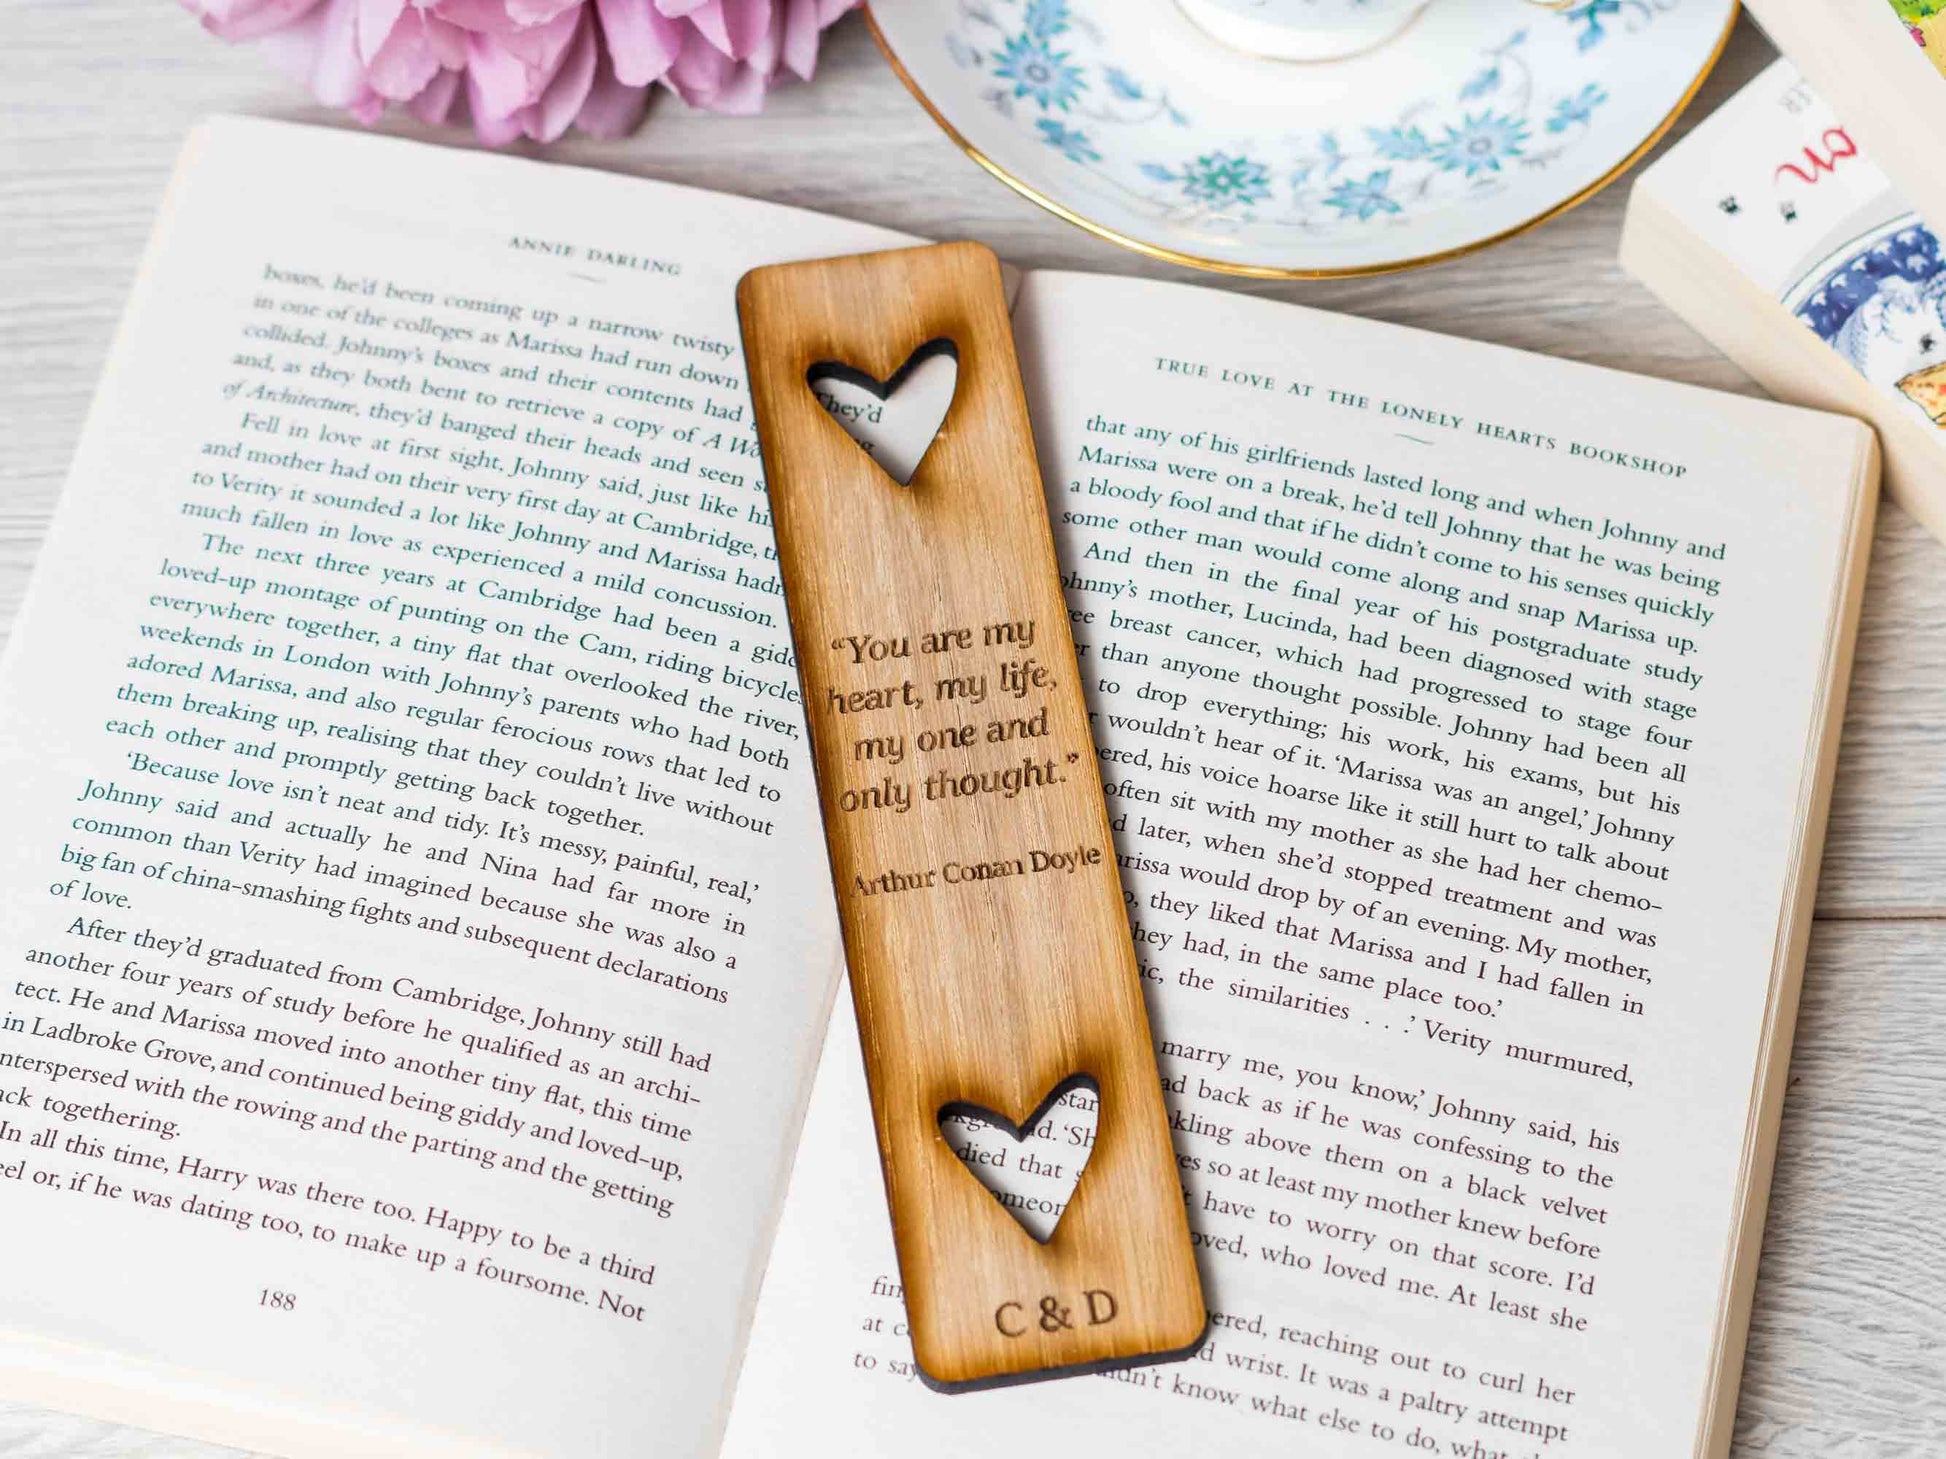 Arthur Conan doyle quote on personalised bookmark